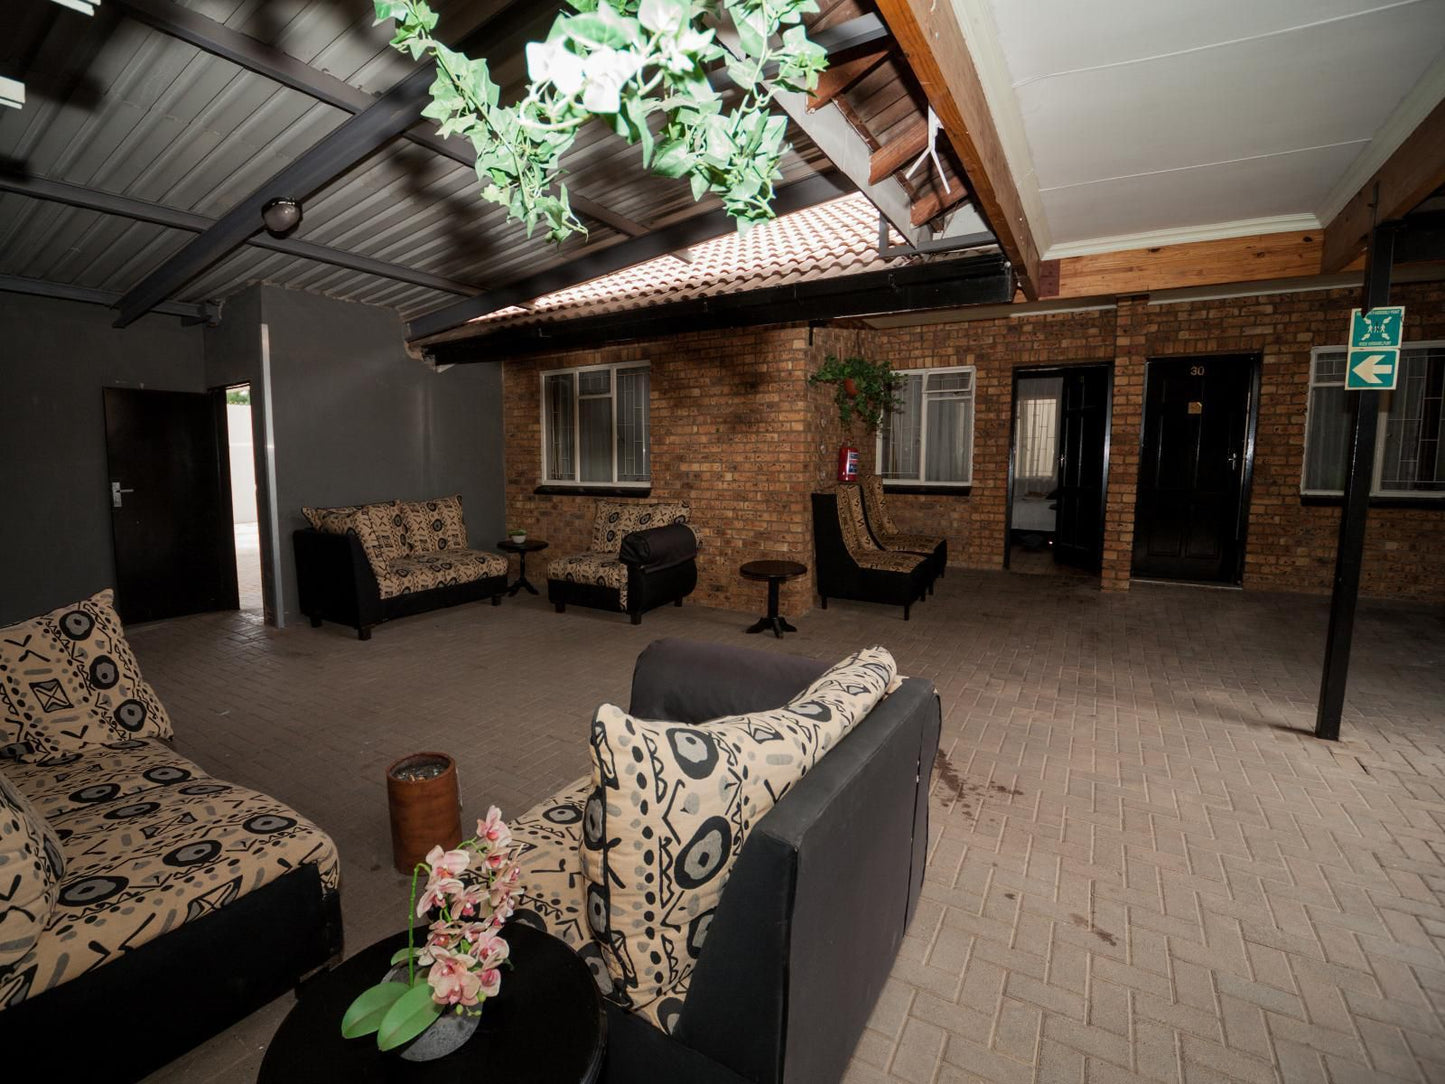 Dunwoodie Travel Lodge Waverley Pretoria Pretoria Tshwane Gauteng South Africa House, Building, Architecture